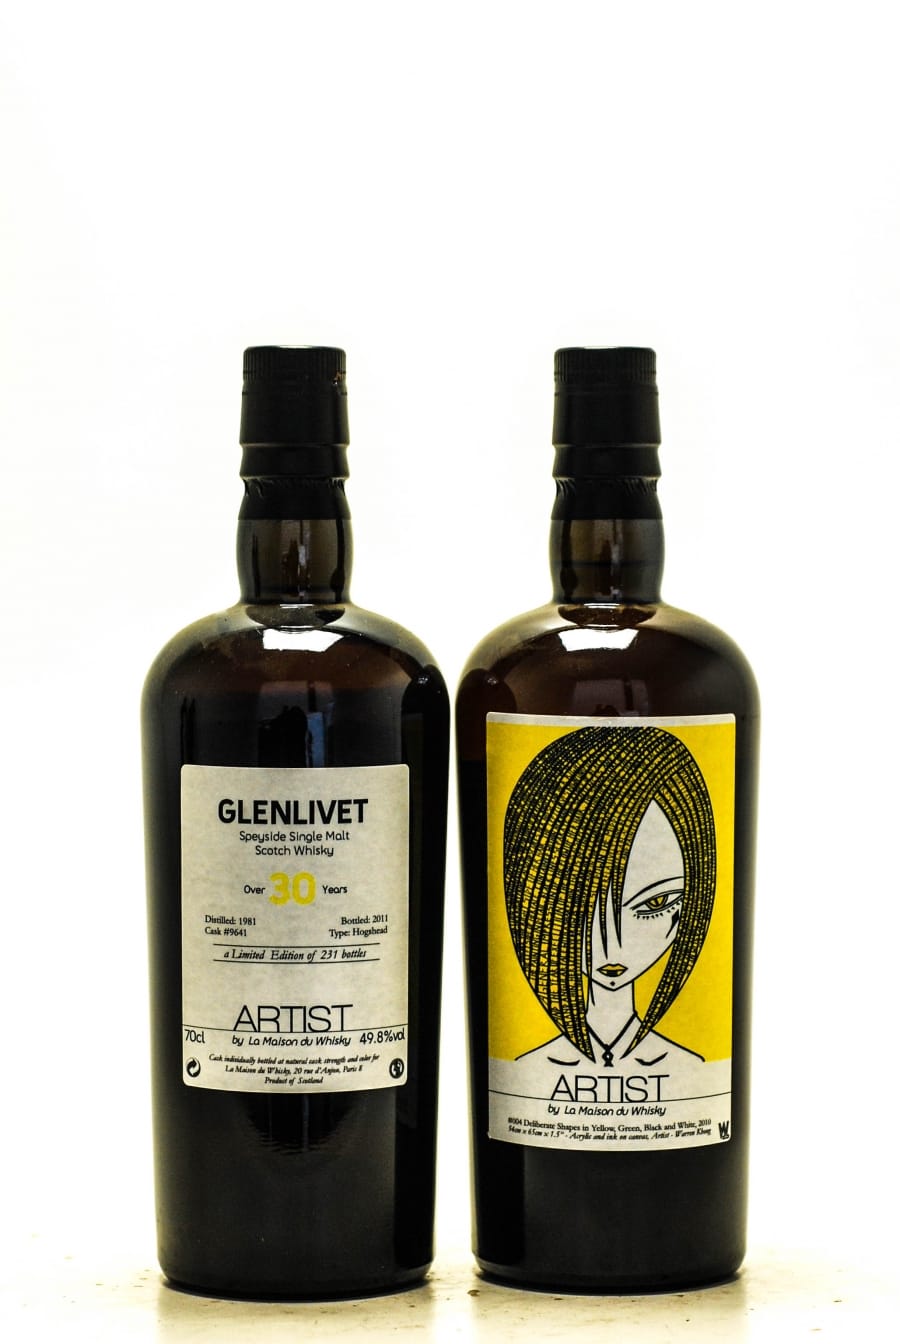 Glenlivet - Glenlivet 30 YO Artist serie La Maison du Whisky Distilled: 1981 Botteld: 2011 Cask: 9641 1 of 231 Bottells 49.8% 1981 Perfect